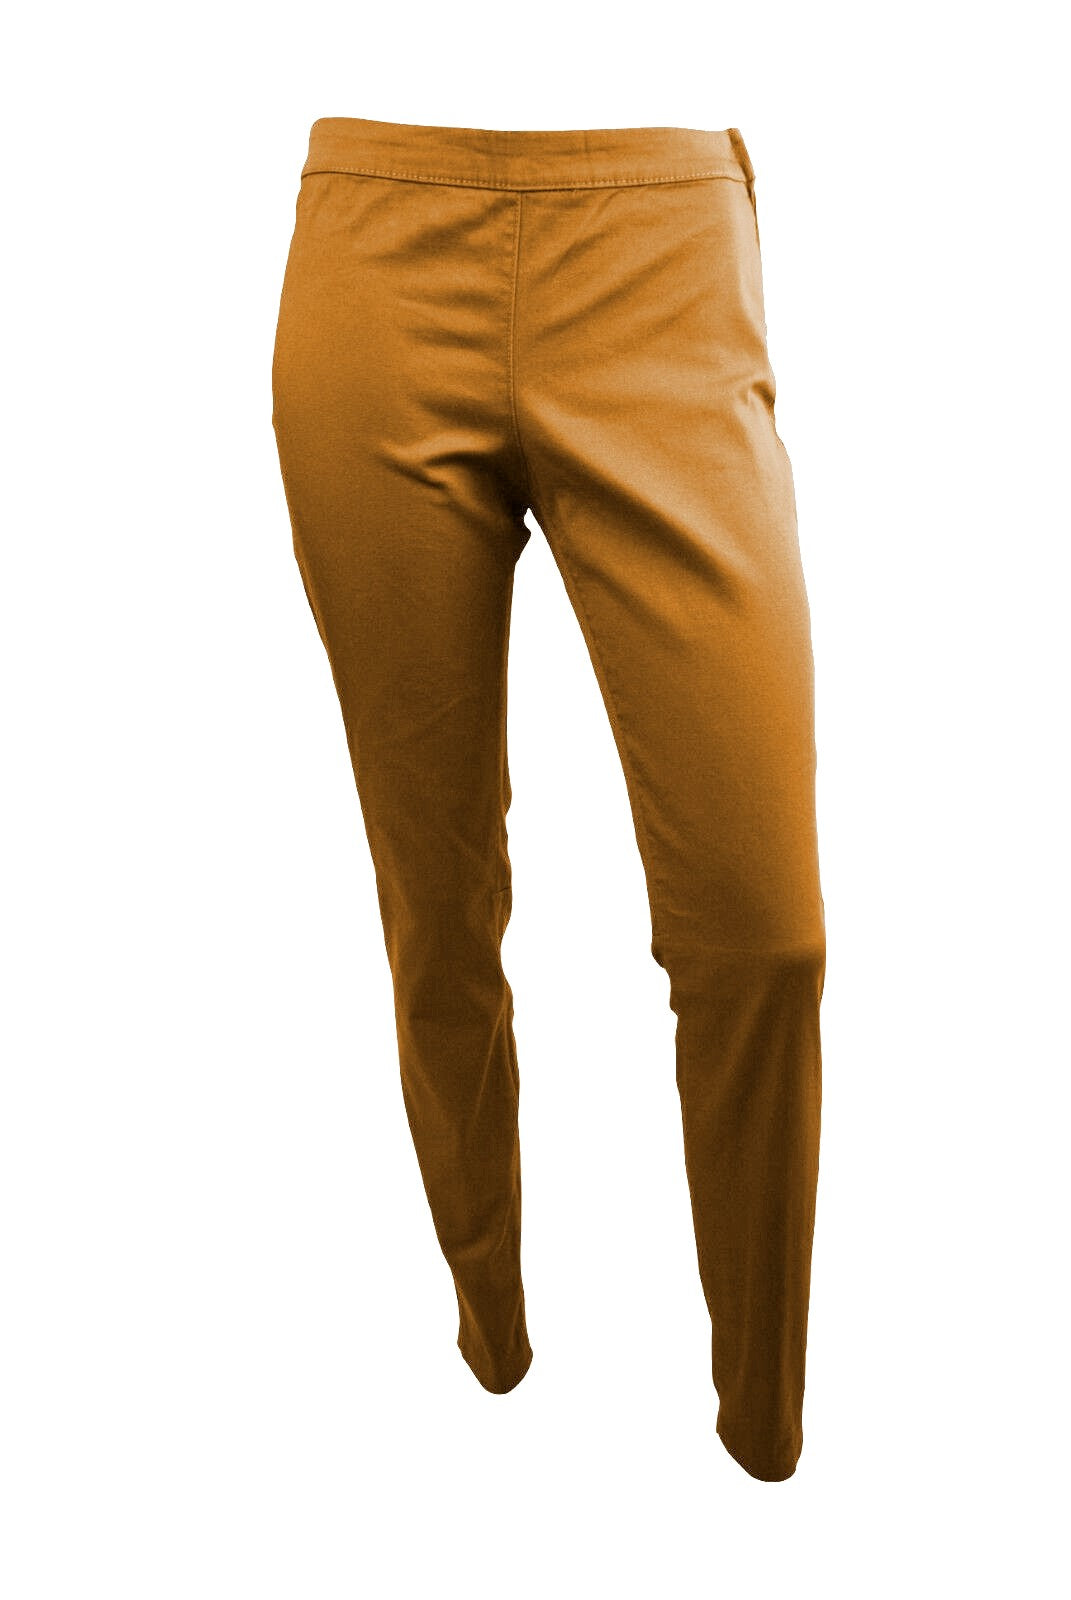 Rusty Brown Skinny Fit Soft Cotton Stretchy Jeggings – Klassywear